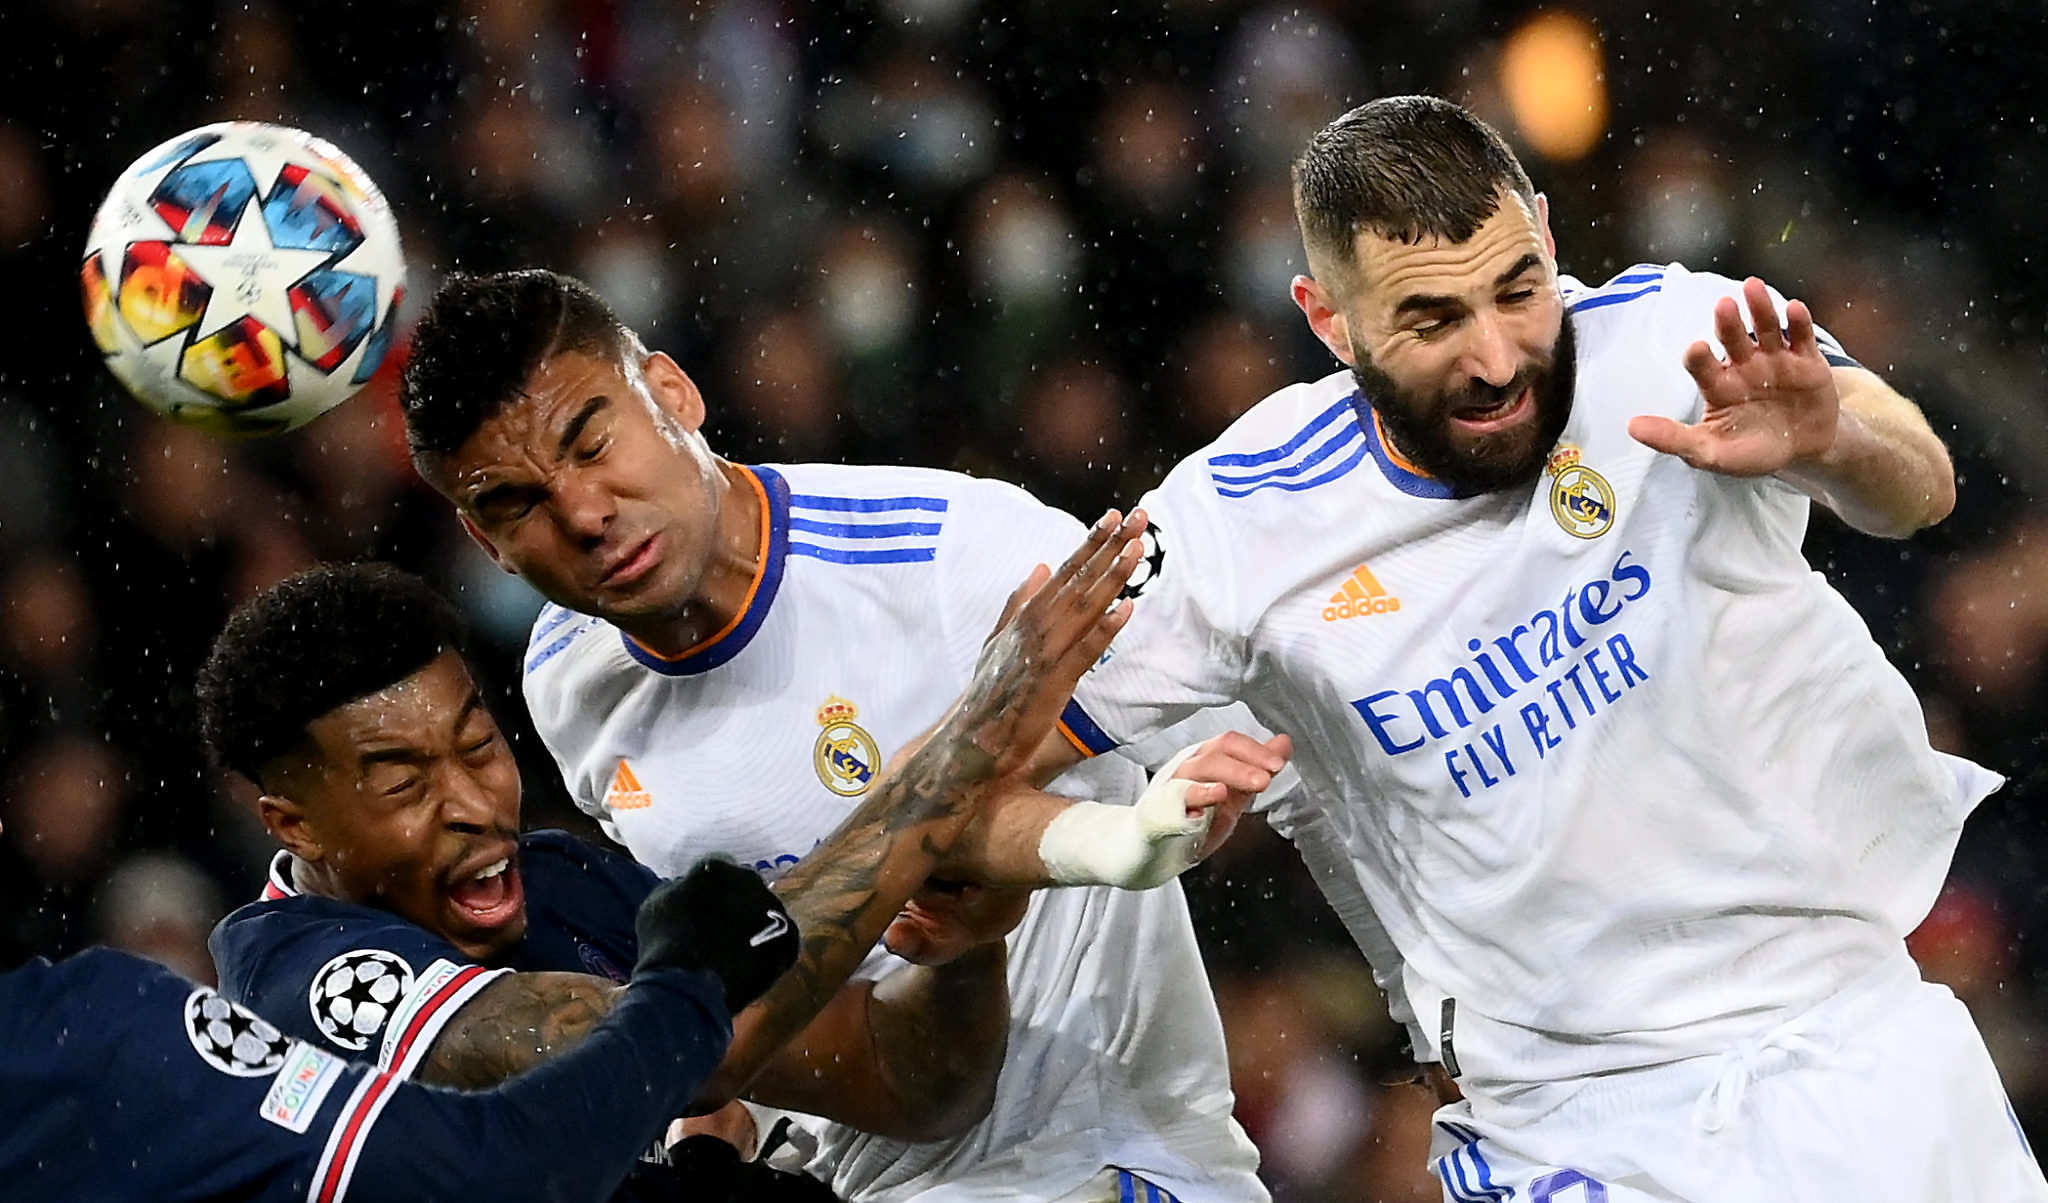 Calificaciones Blancas | PSG 1-0 Real Madrid